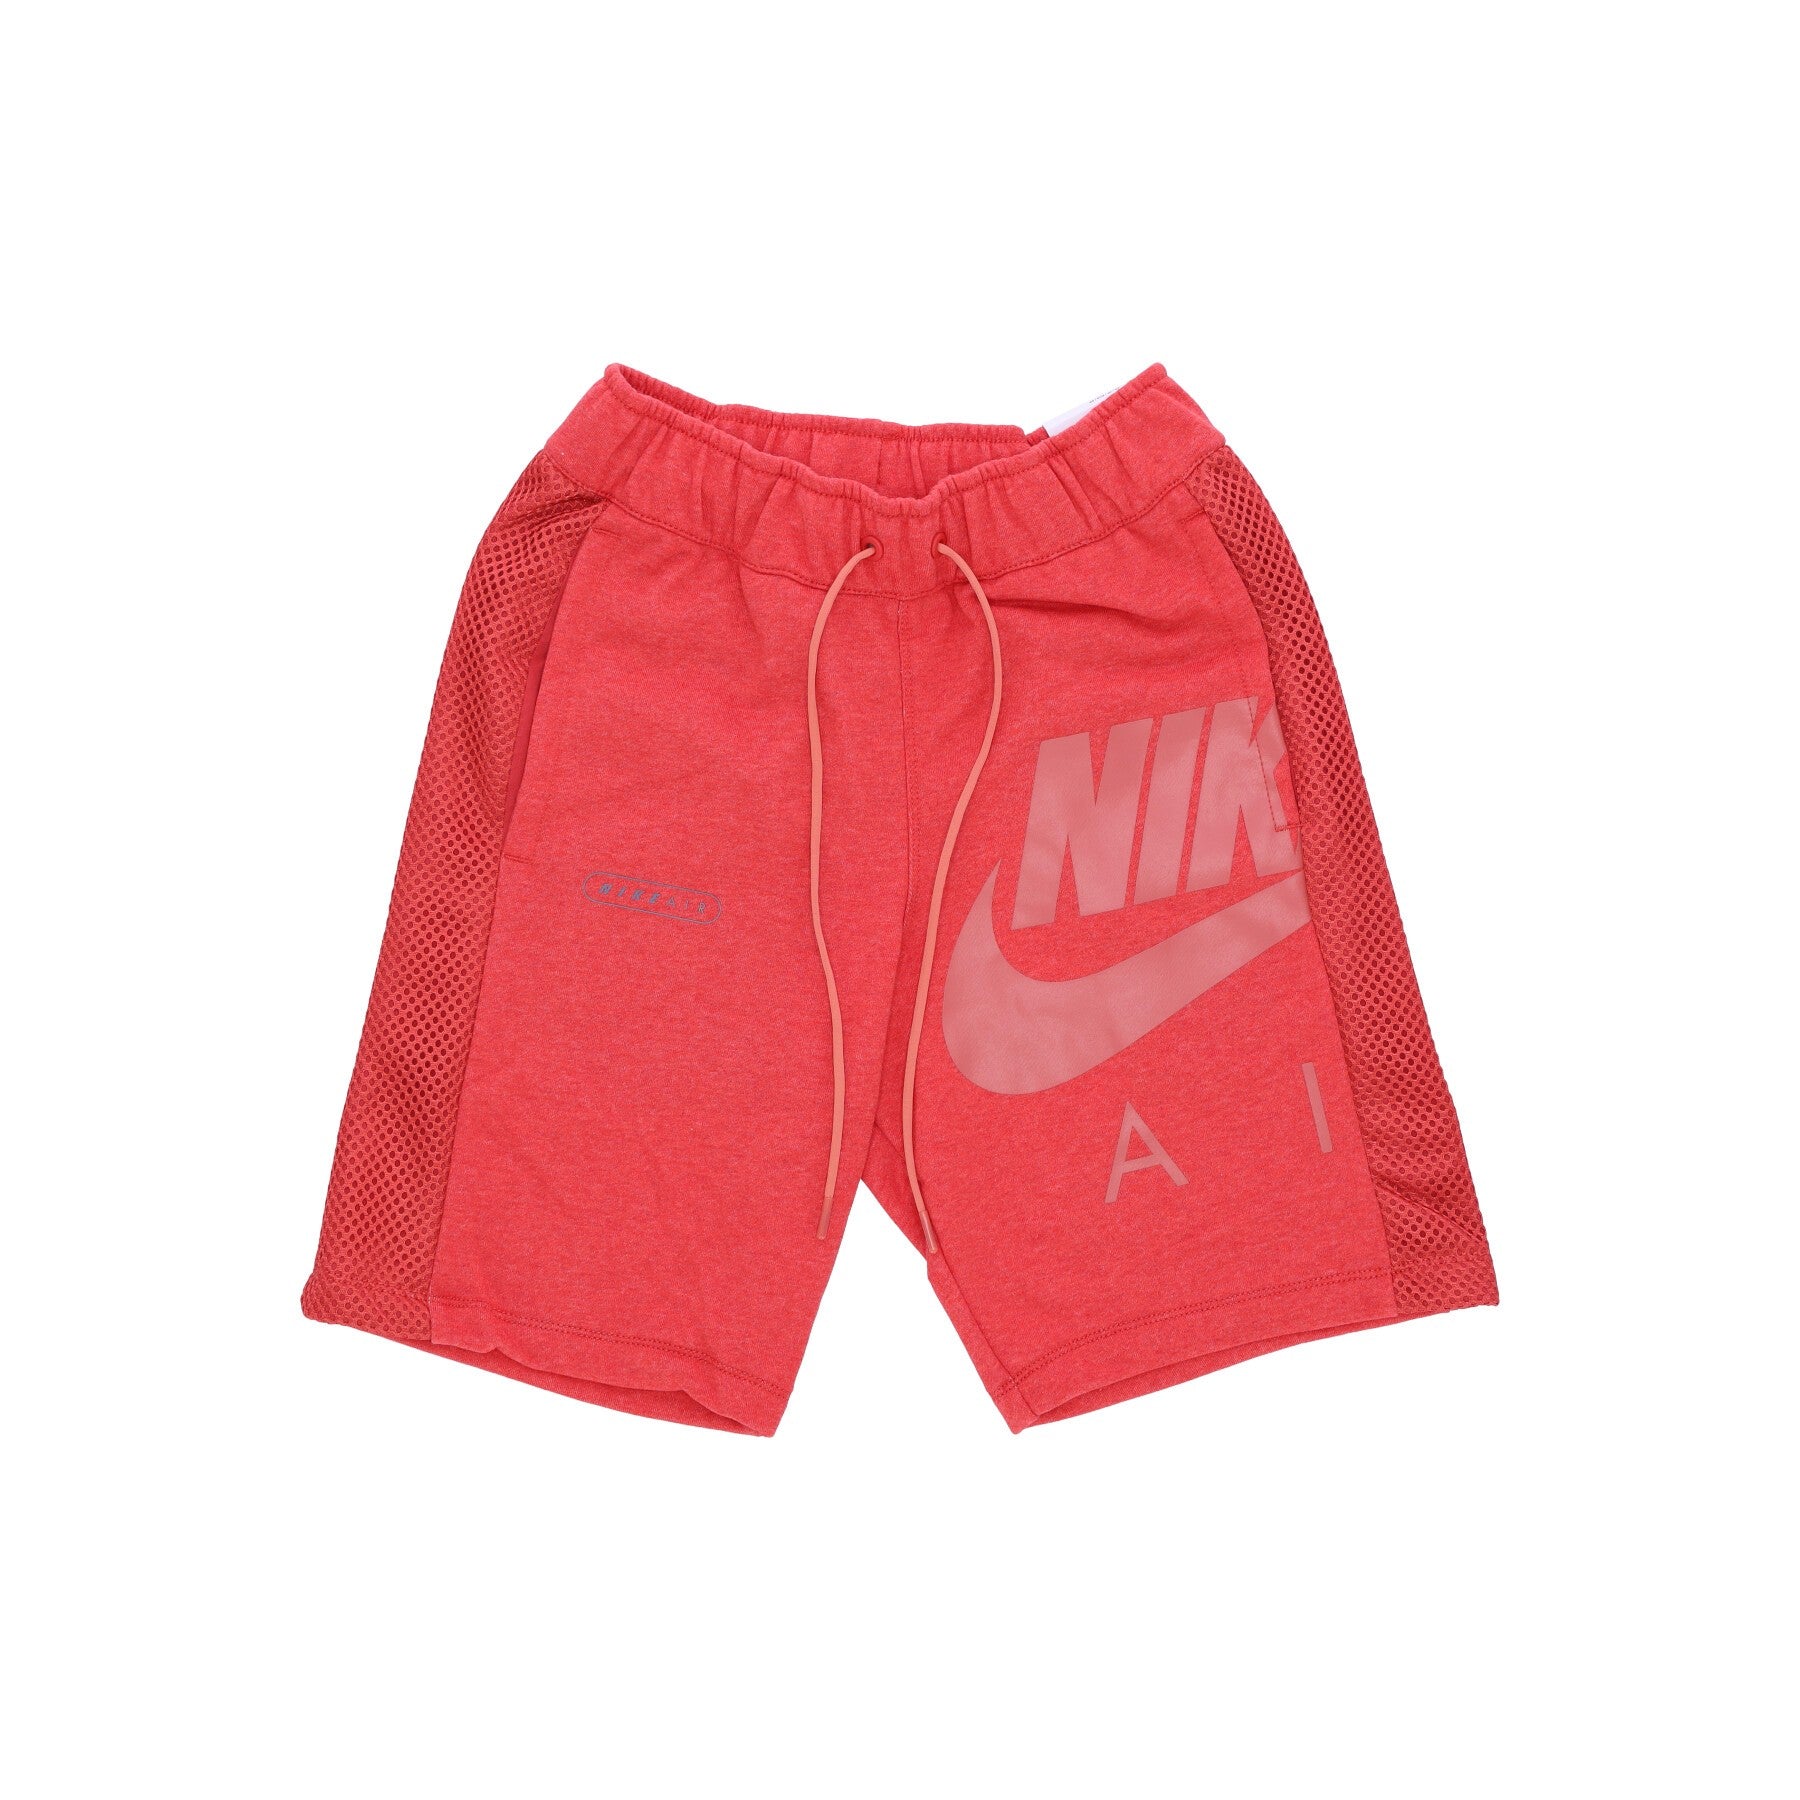 Nike, Pantalone Corto Tuta Uomo Sportswear Air F, Red Clay/htr/madder Root